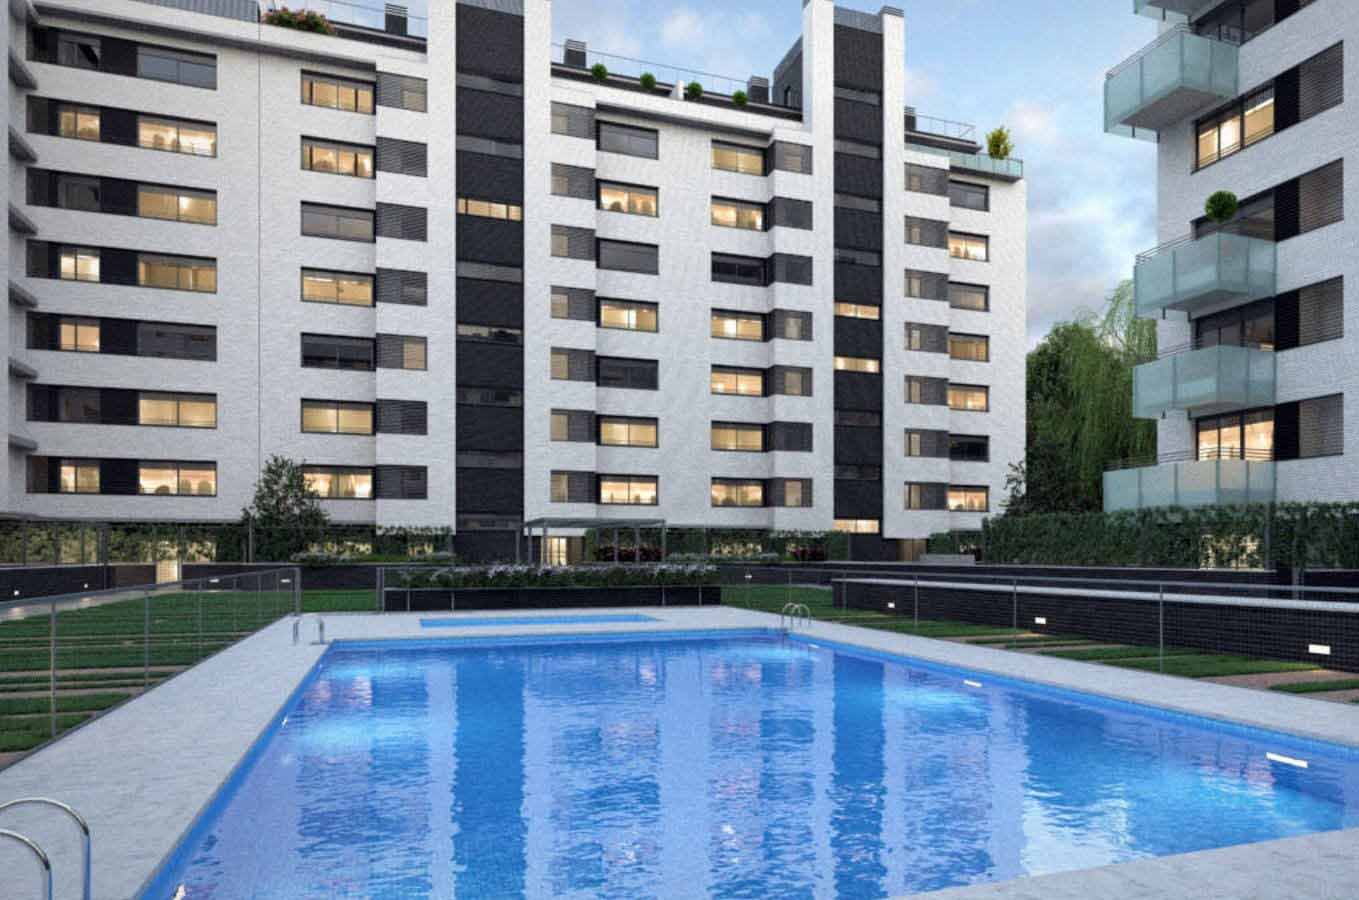 Bain Capital Credit acquires Spanish real estate developer Habitat